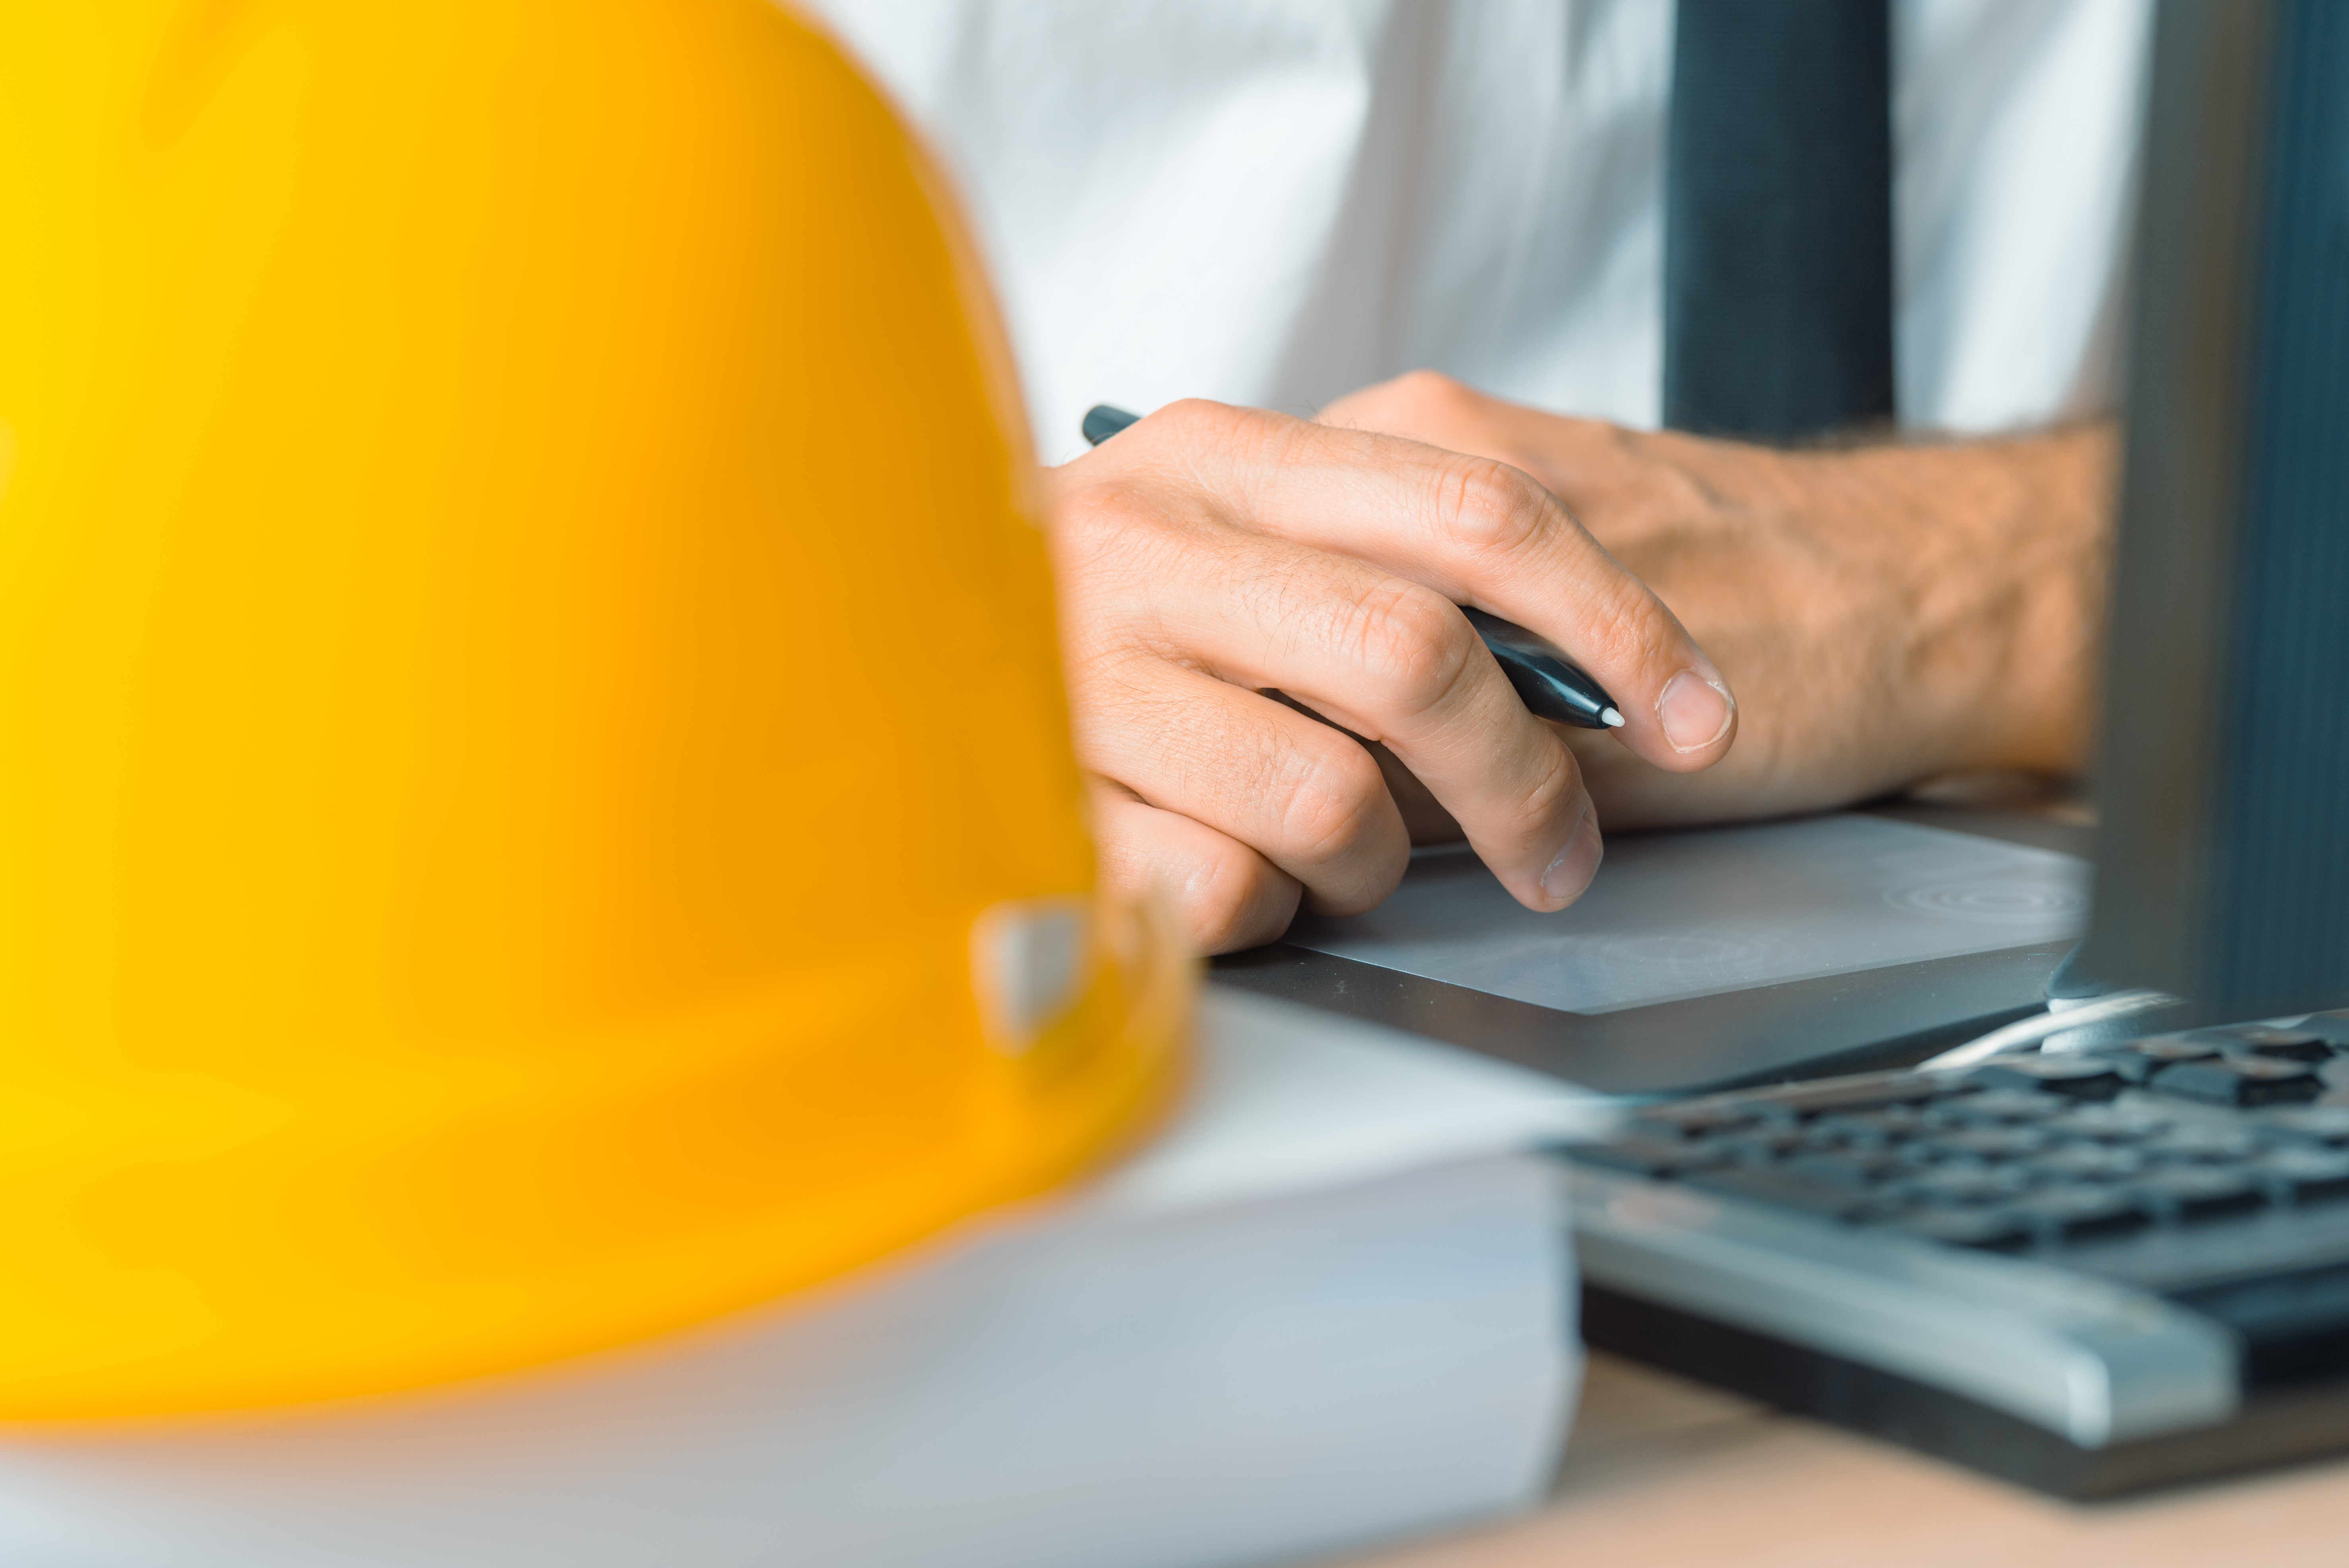 construction management software